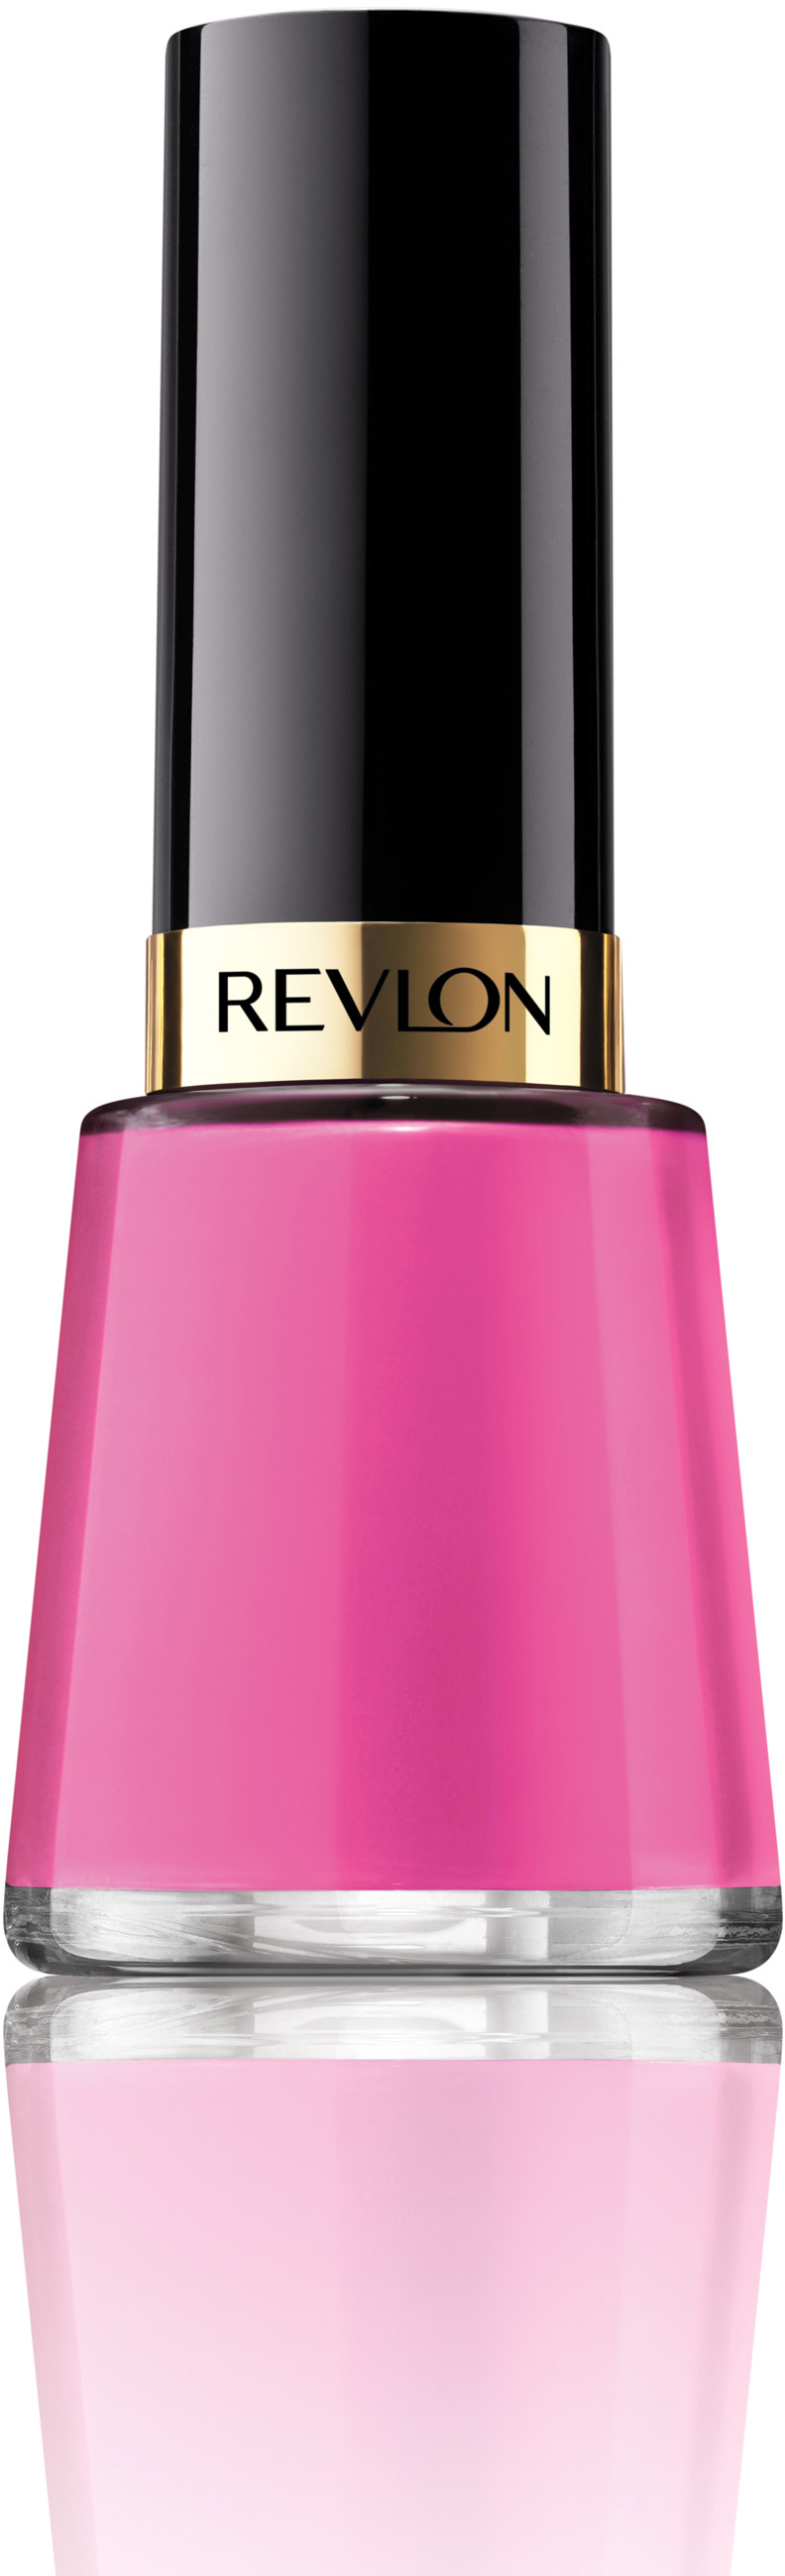 Revlon Cosmetics Nail Enamel 276